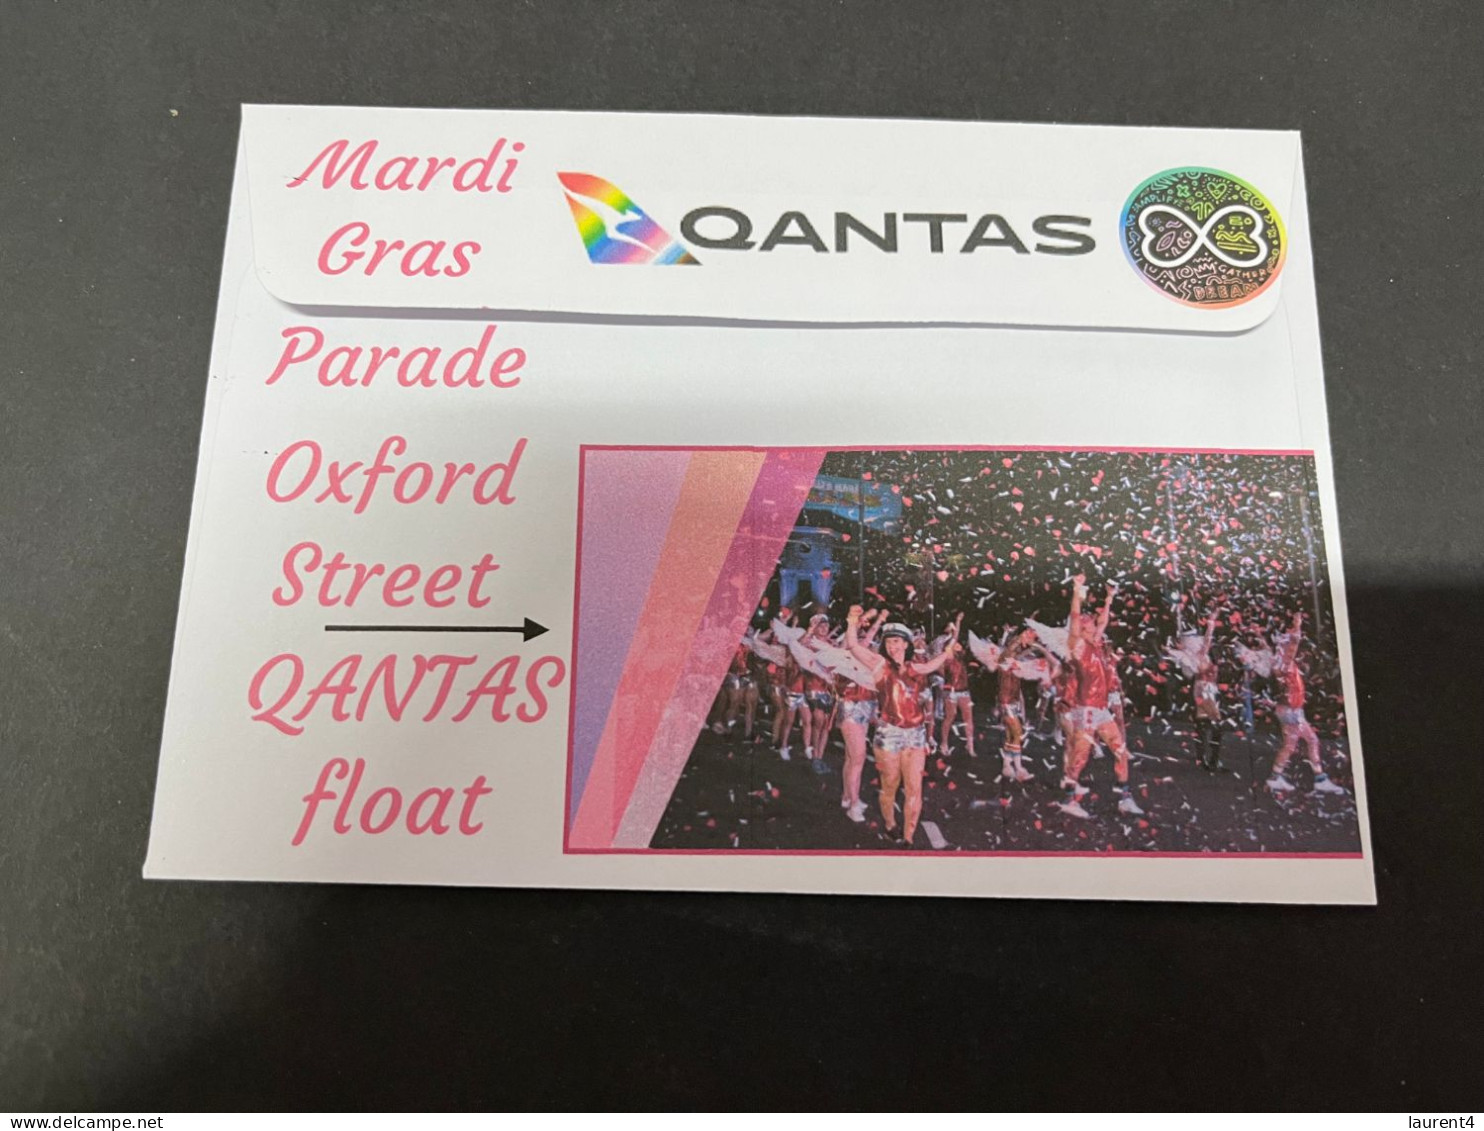 26-9-2023 (2 U 12) Sydney World Pride 2023 - QANTAS Rainbow Aircraft Tail (QANTAS To Norfolk) 25-2-2023 - Storia Postale